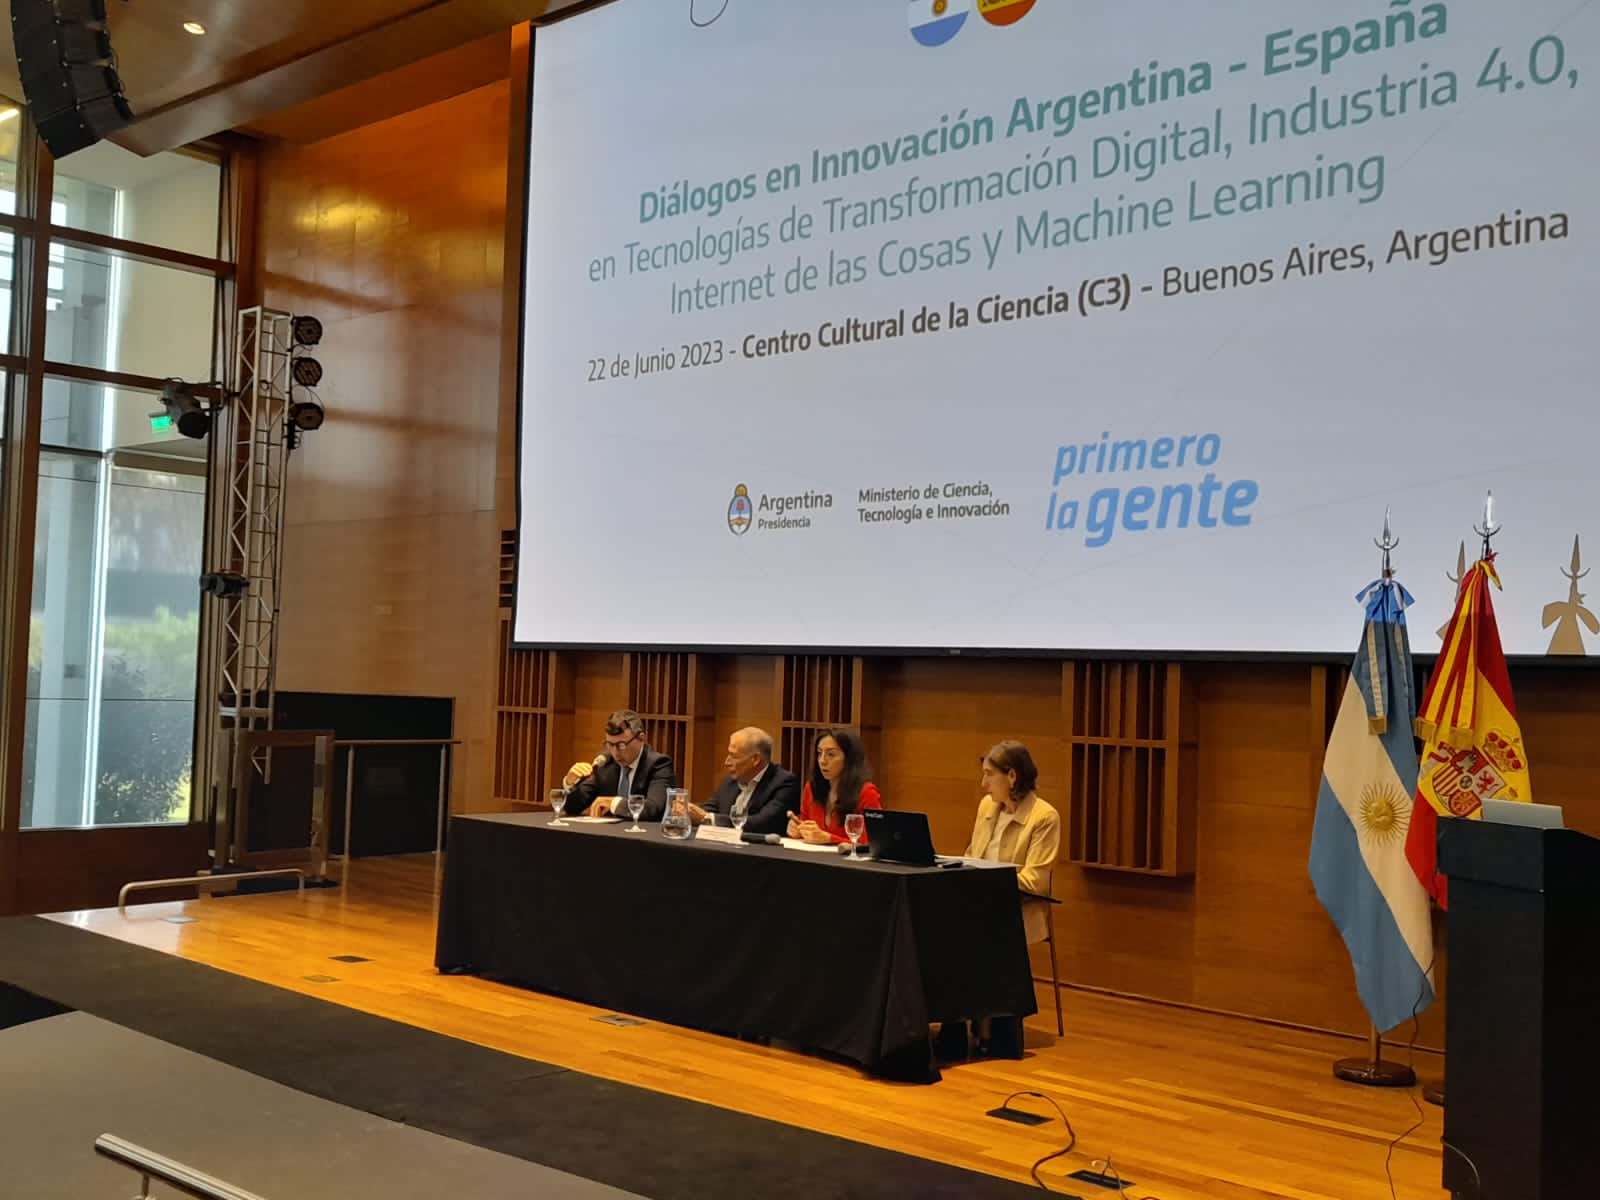 CDTI invites Alvantia to present its technological capabilities in Argentina